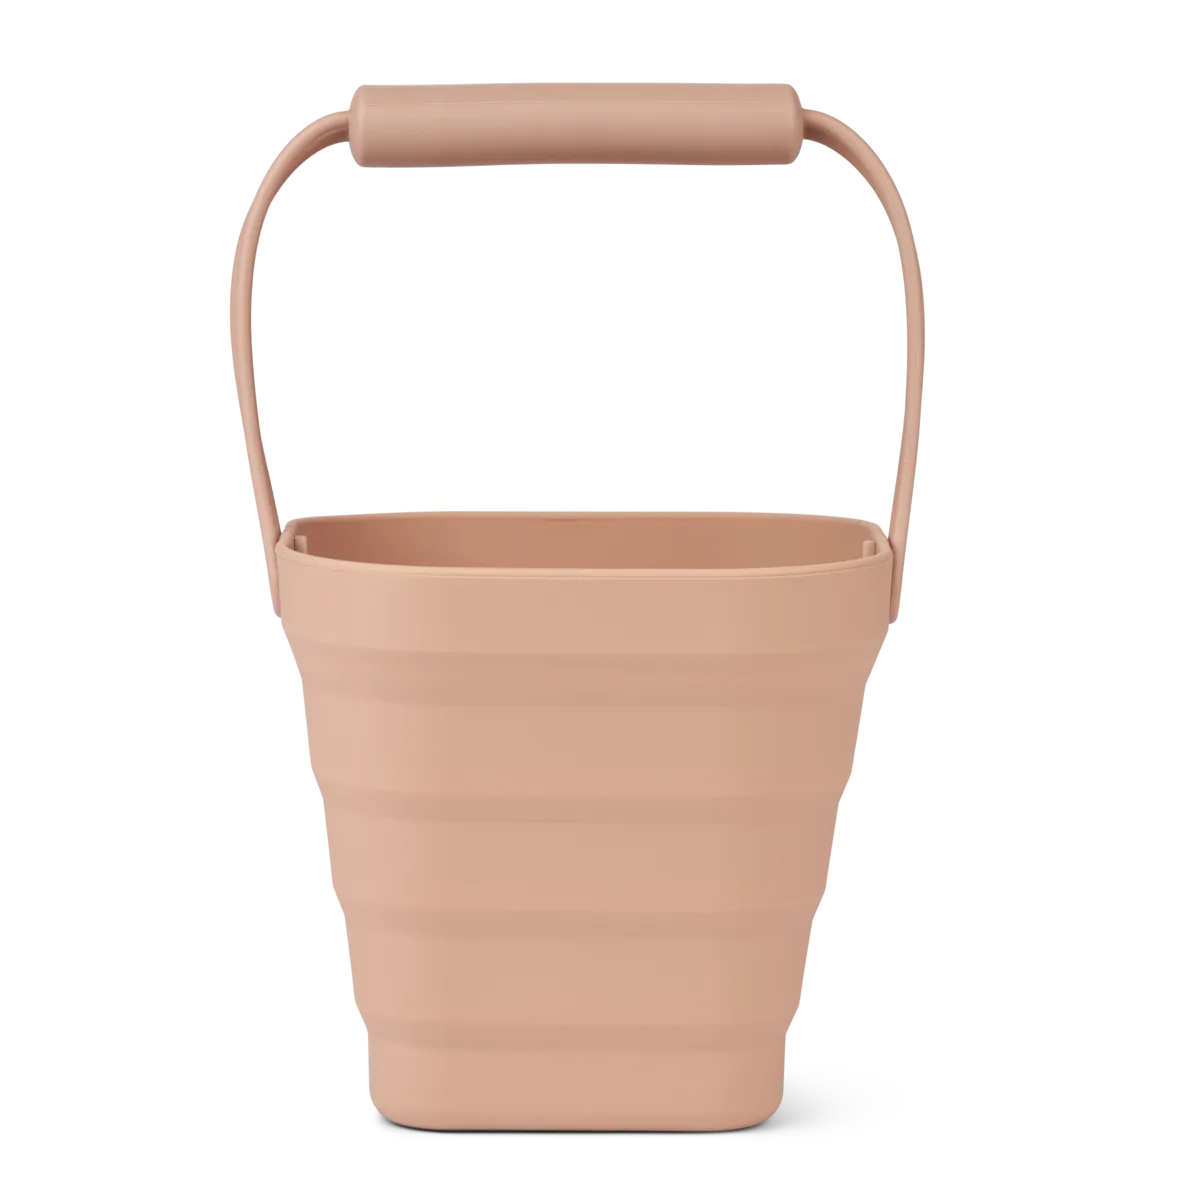 Faltbarer Eimer aus Silikon - Abelone bucket